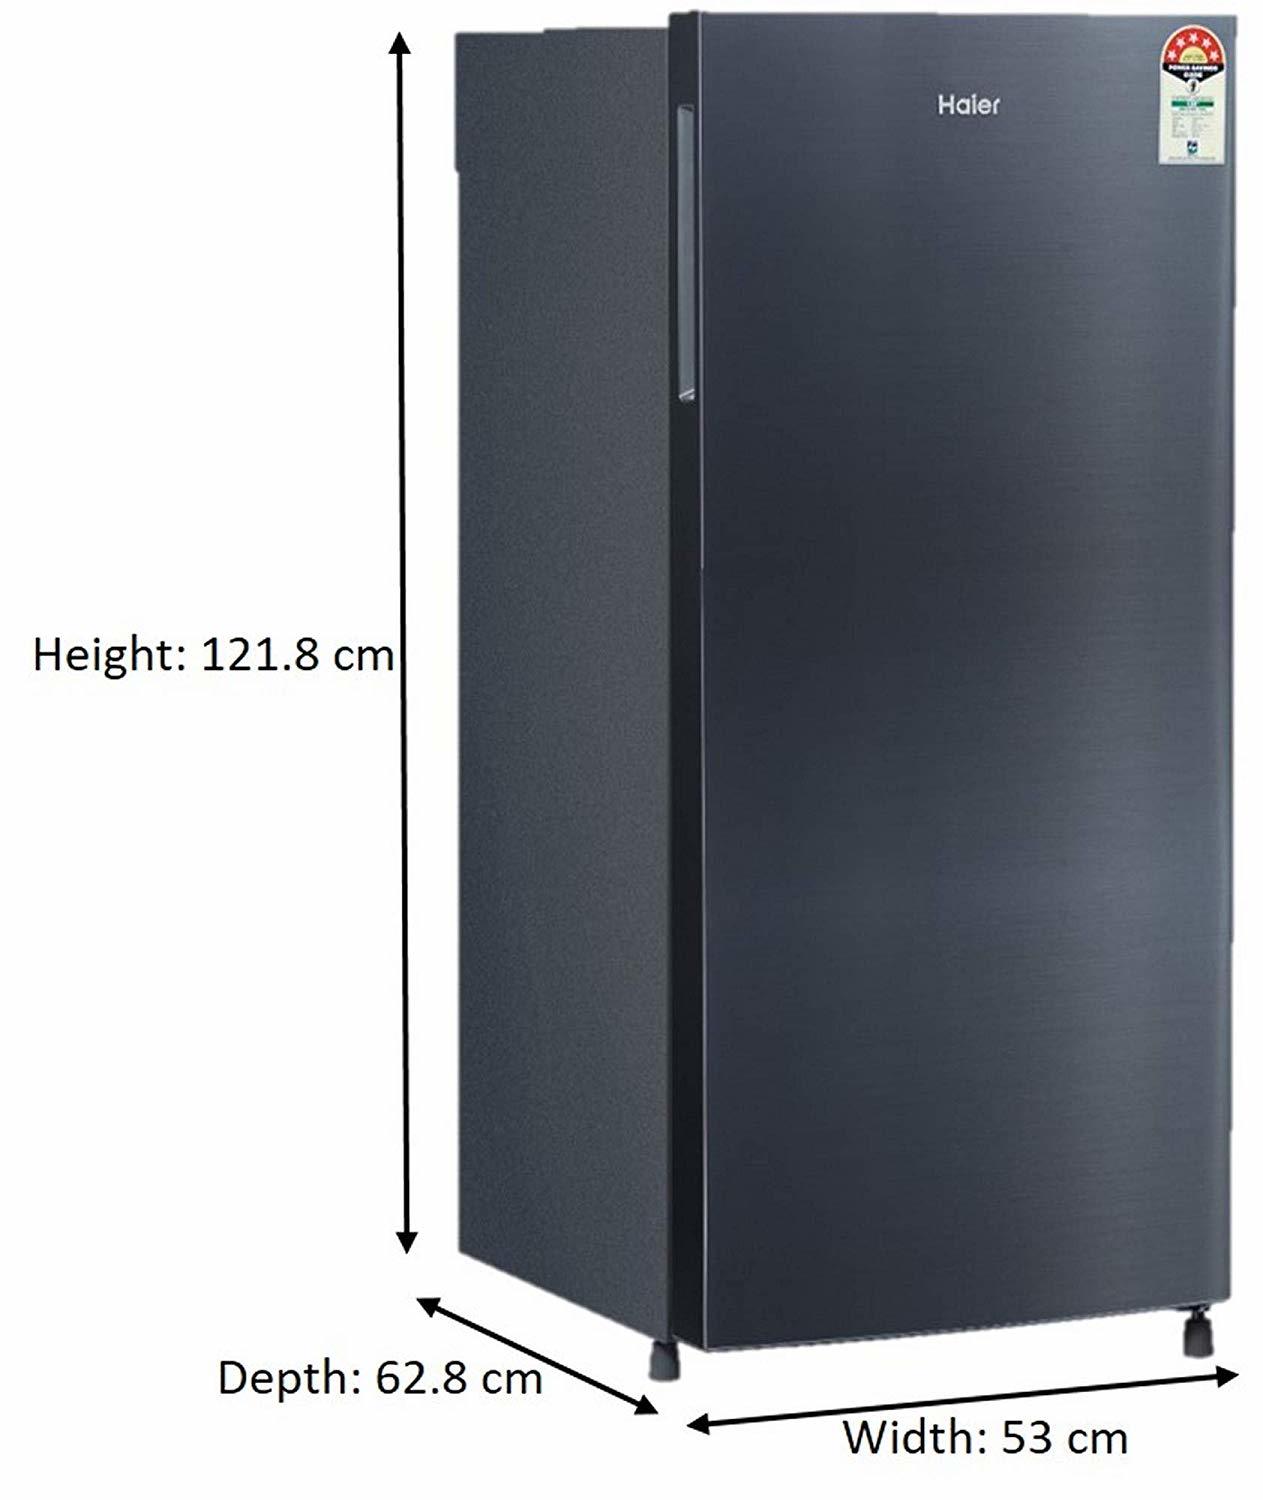 Haier 195 L 5 Star ( 2019 ) Direct Cool Single Door Refrigerator (HRD-1955CSS-E, Shiny Steel)